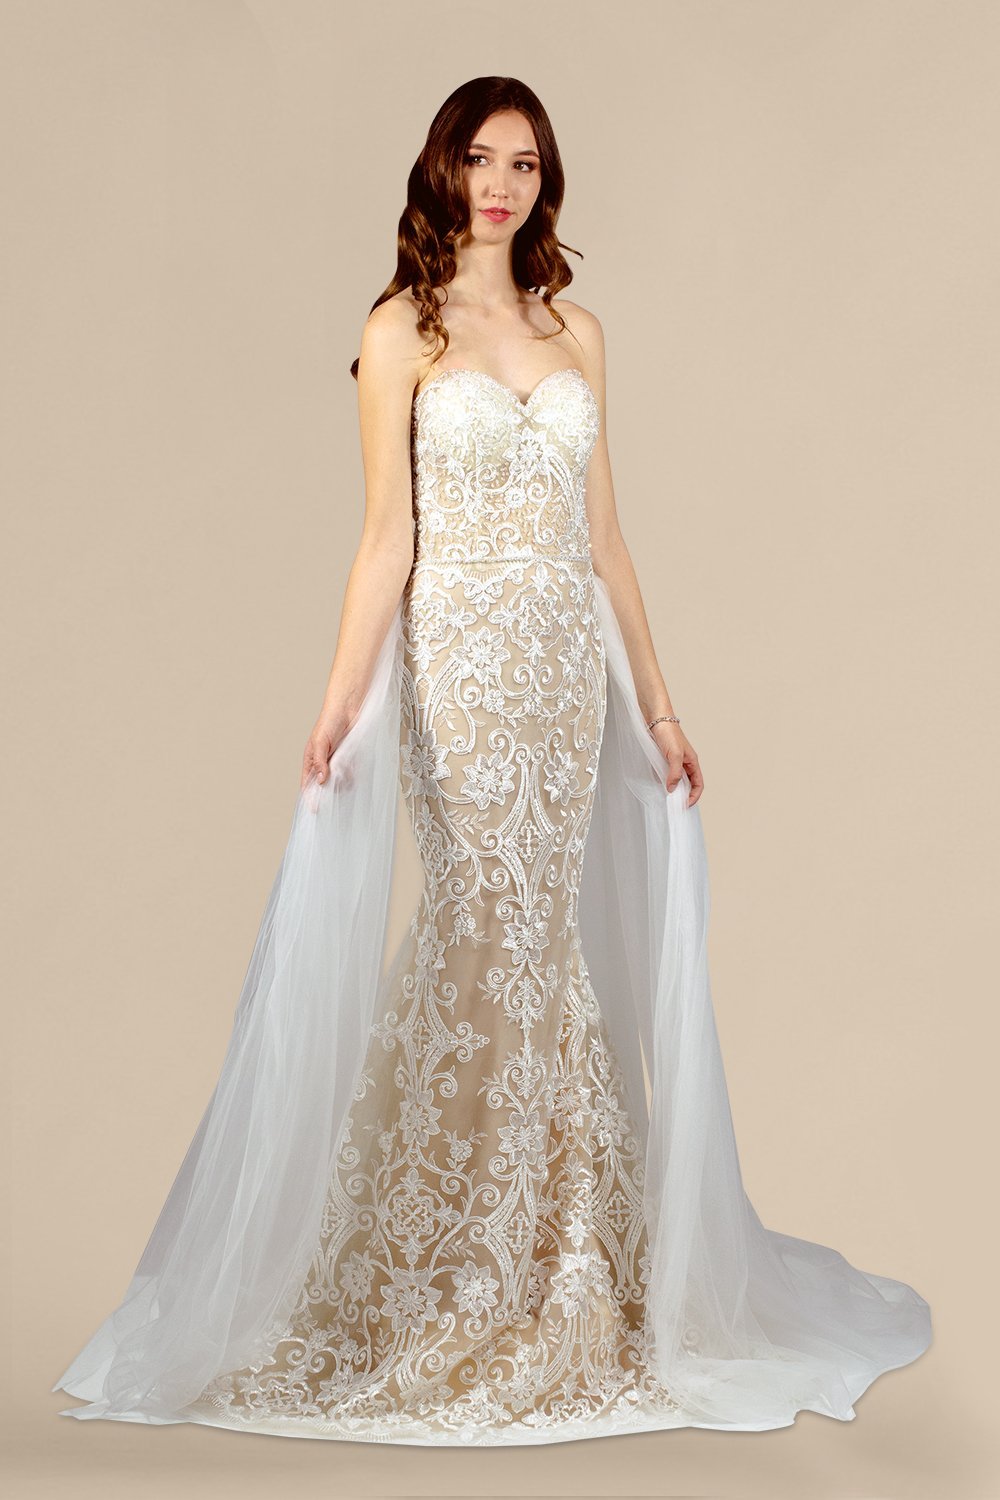 custom made wedding dress with detachable skirt overlay perth australia envious bridal & formal